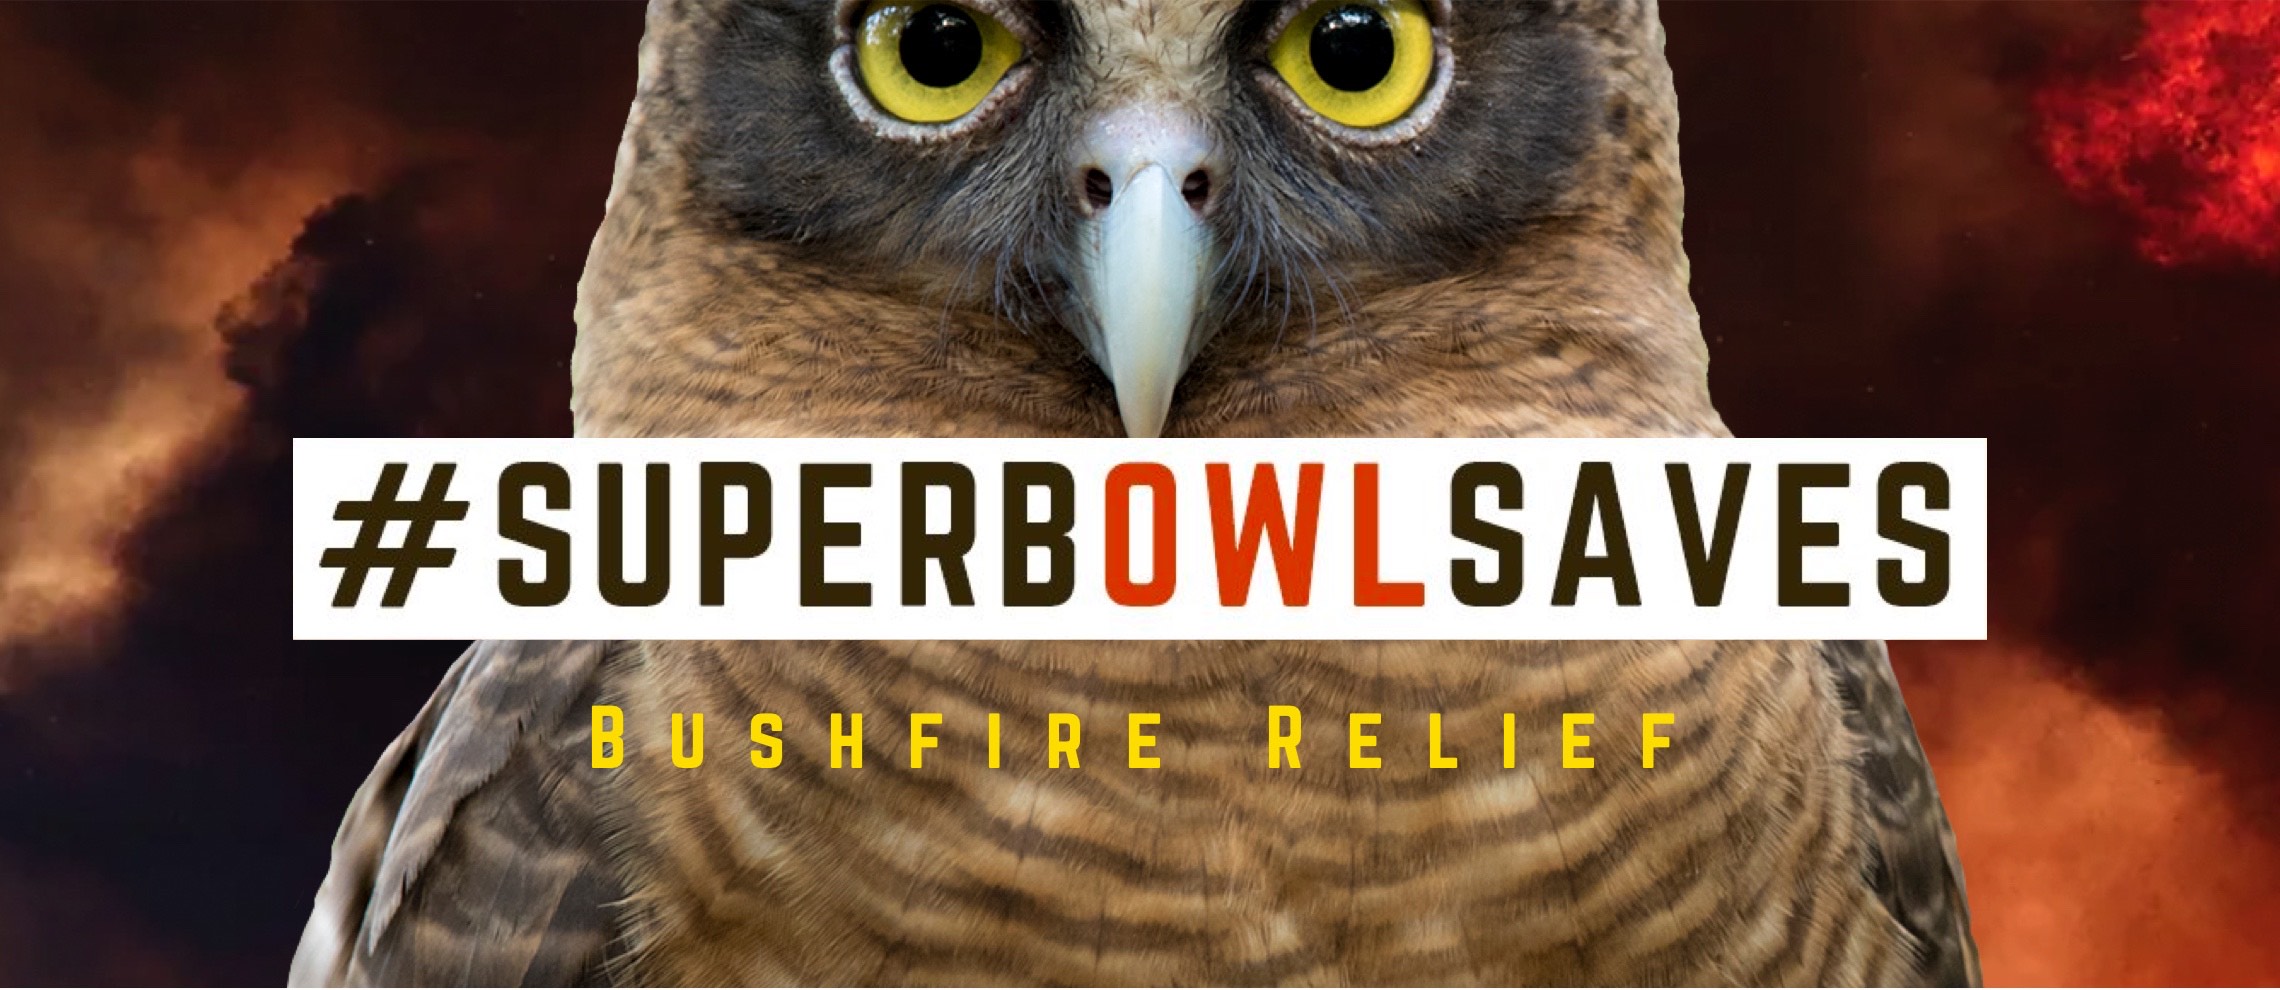 Image of an owl. "#superbowlsaves - Bushfire Relief"